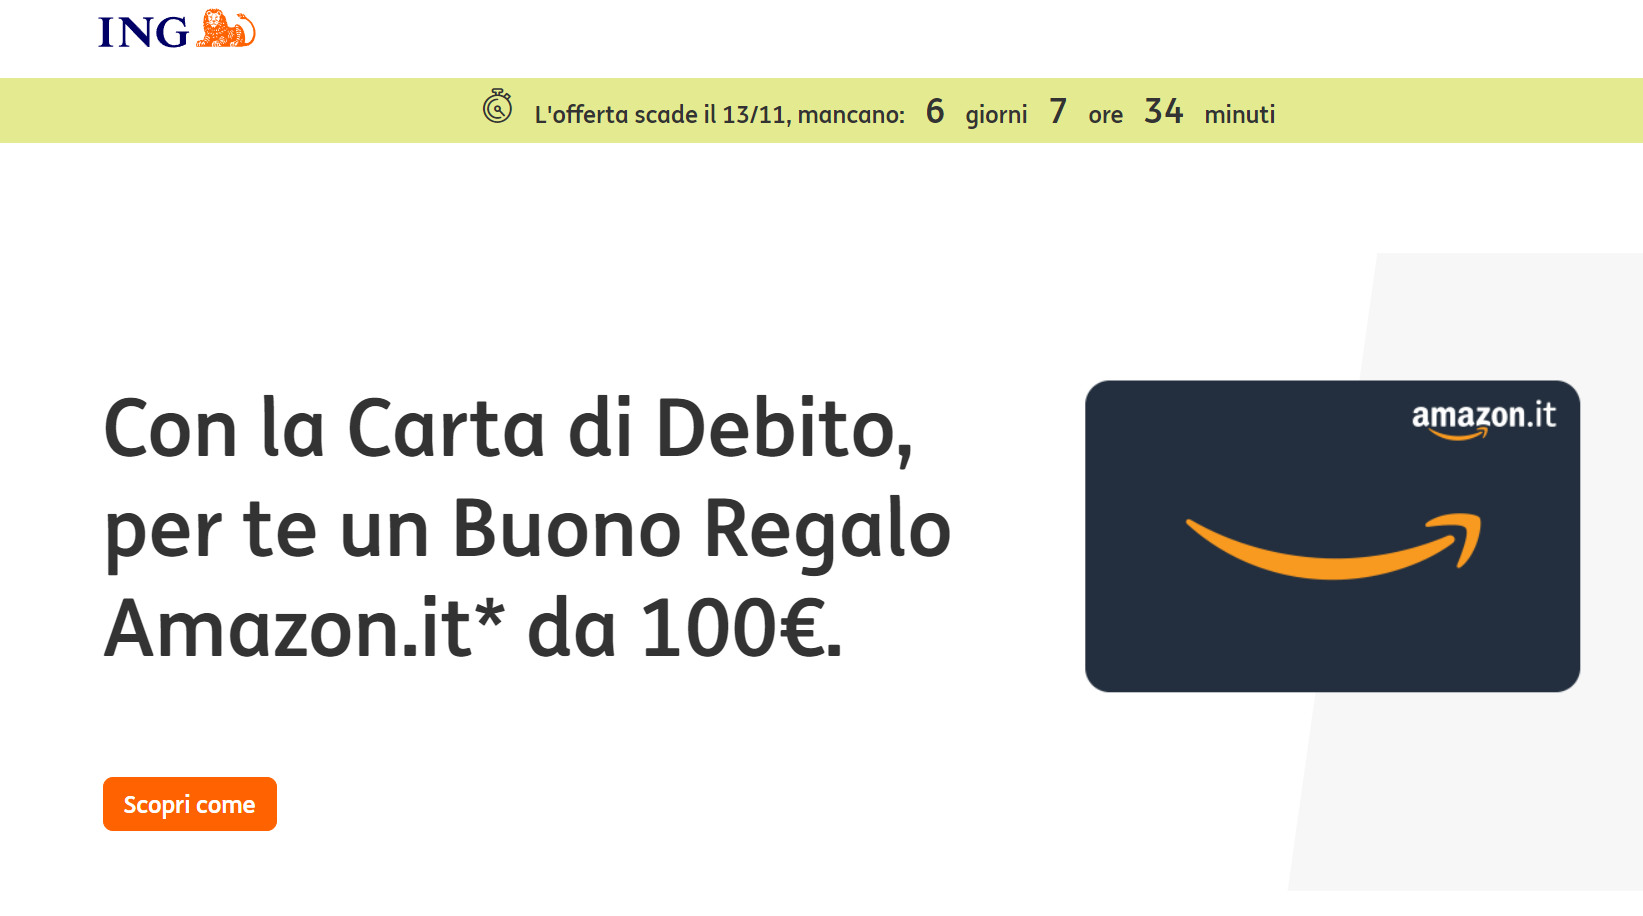 Buono Regalo Amazon.it